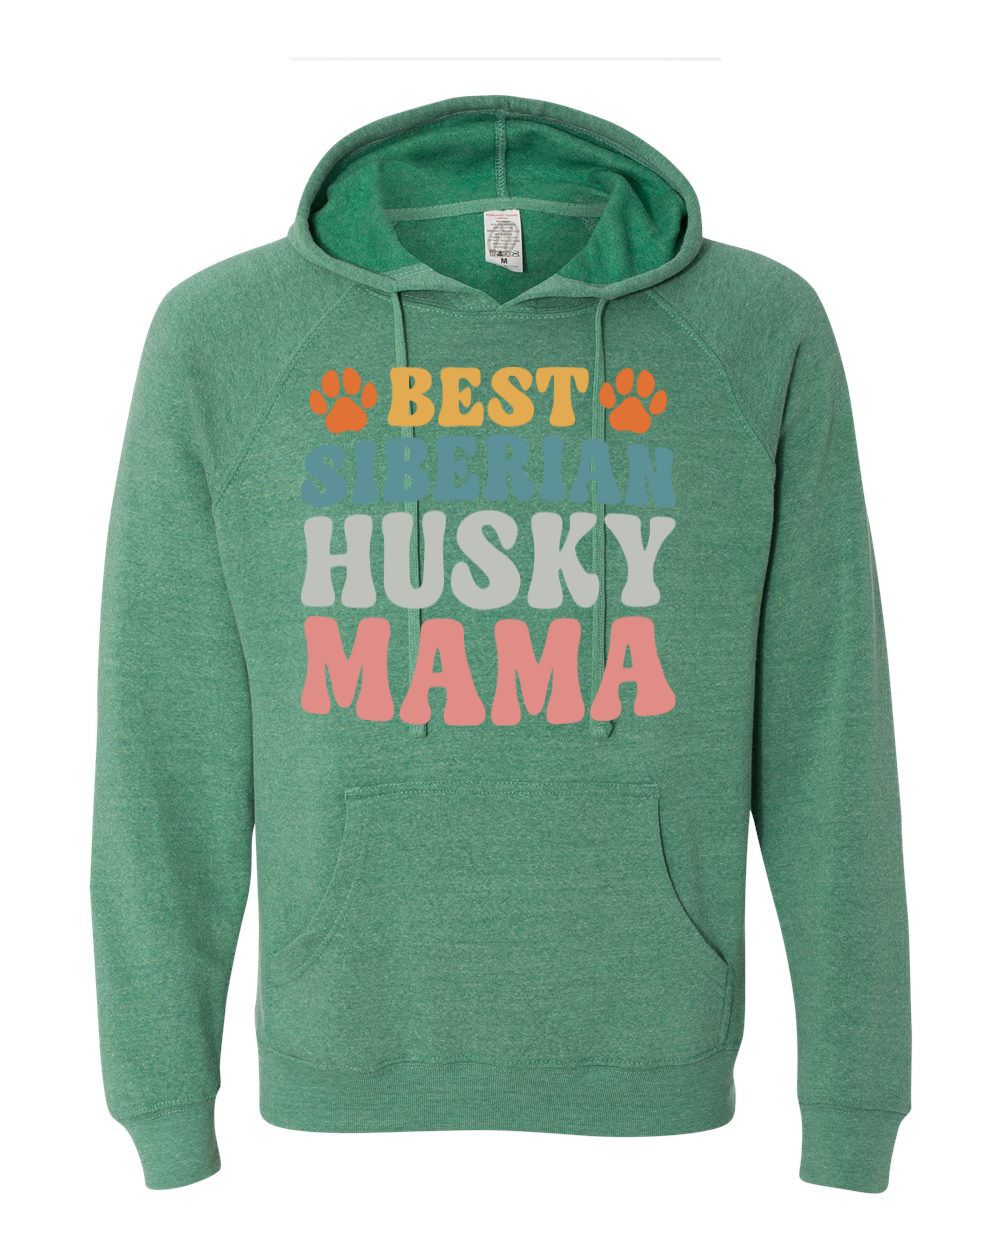 Best Siberian Husky Mama Colored Print Hoodie